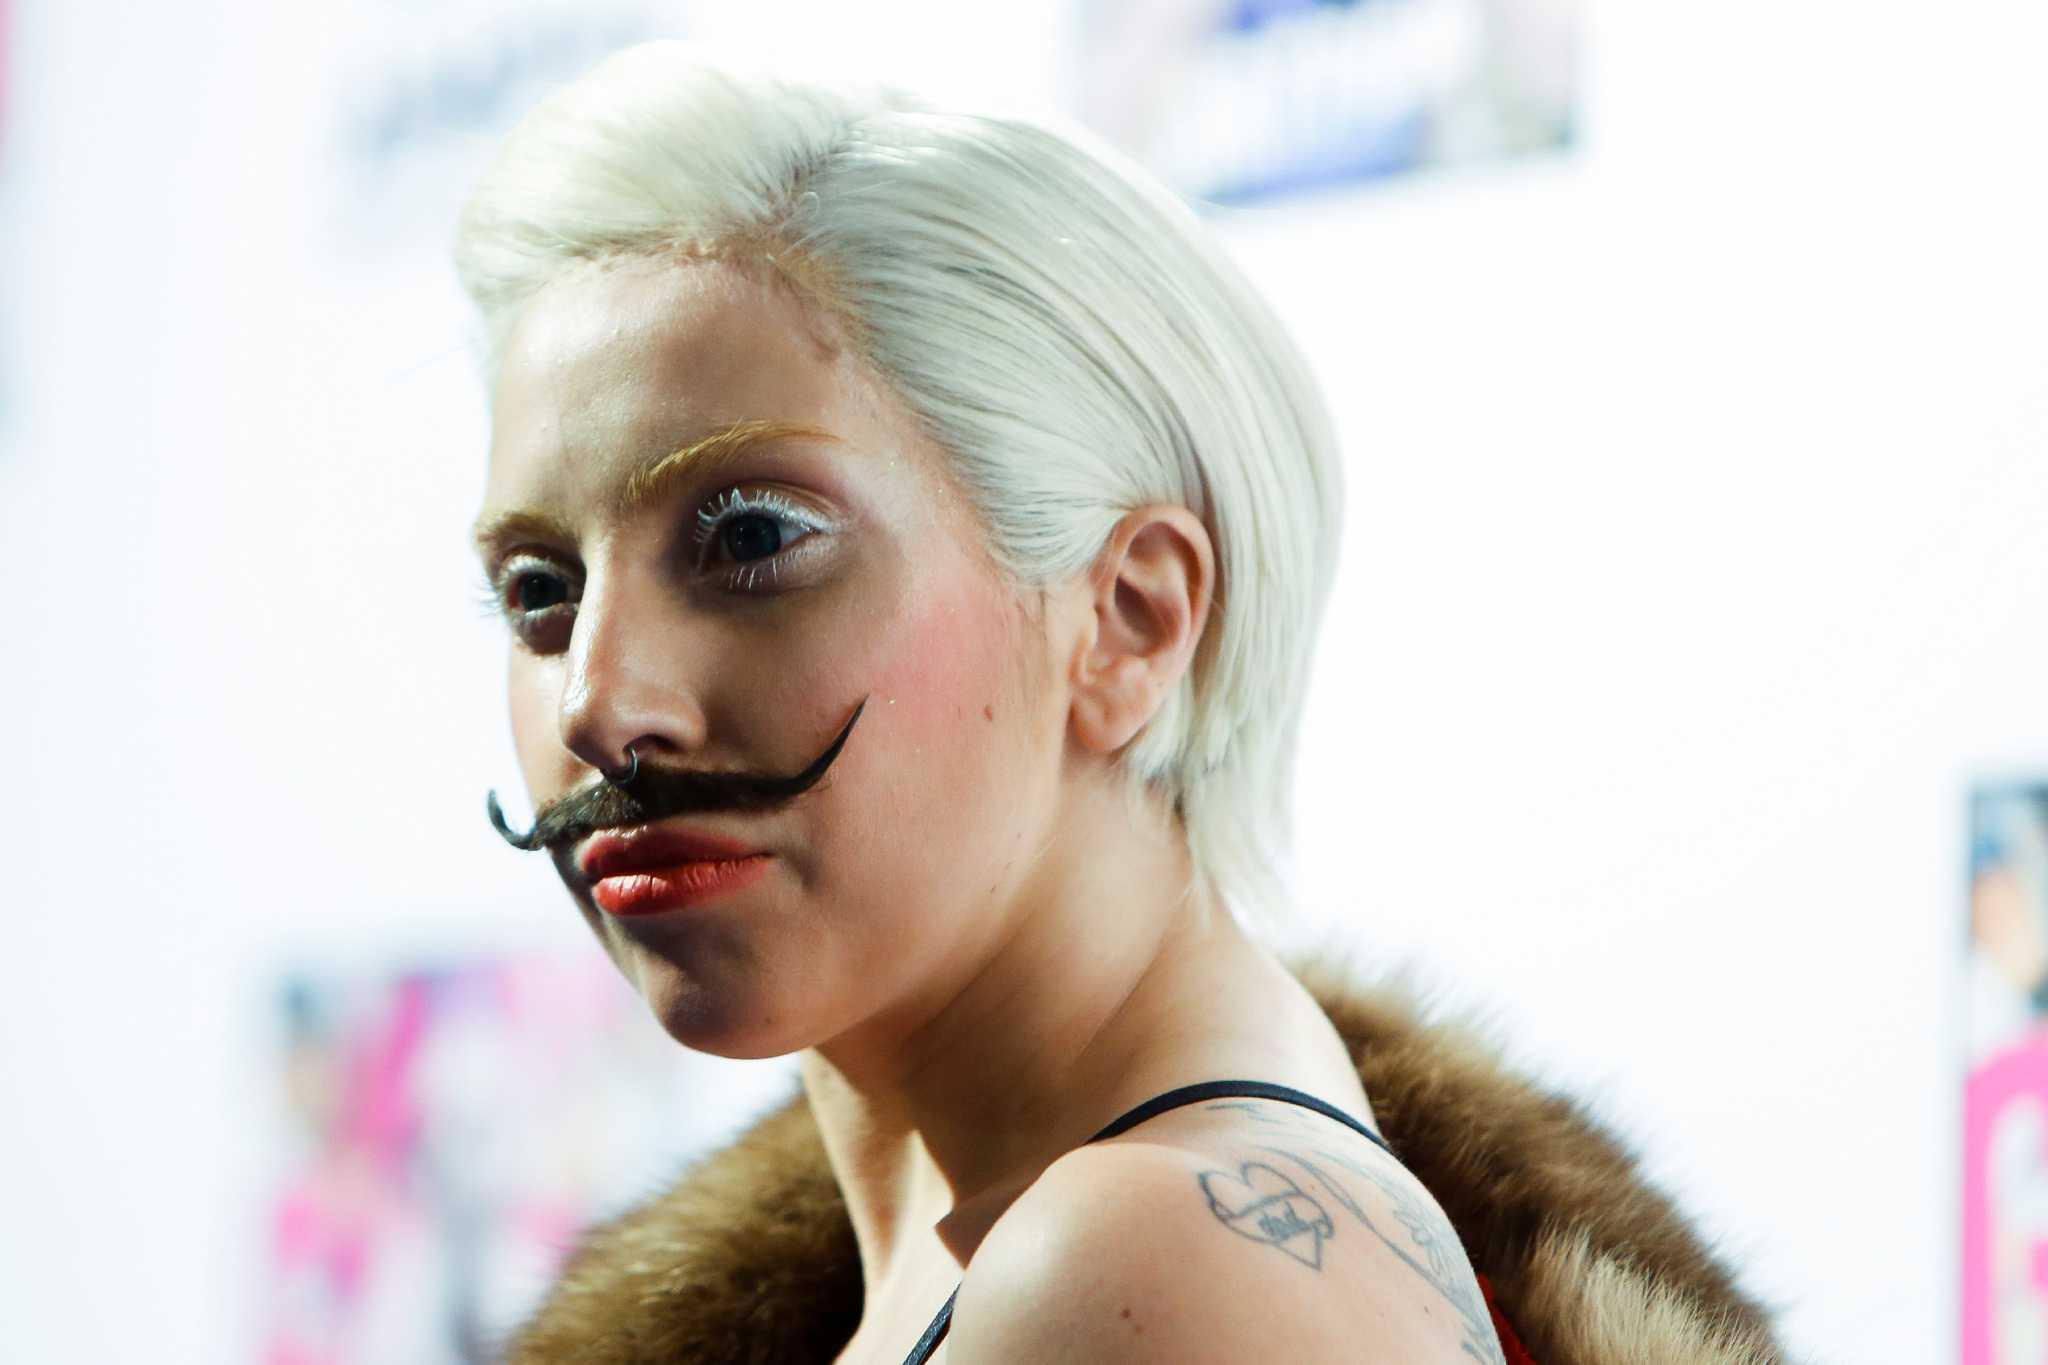 Мов га га. Lady Gaga 2013. Леди Гага фрик. Леди Гага фото 2013.